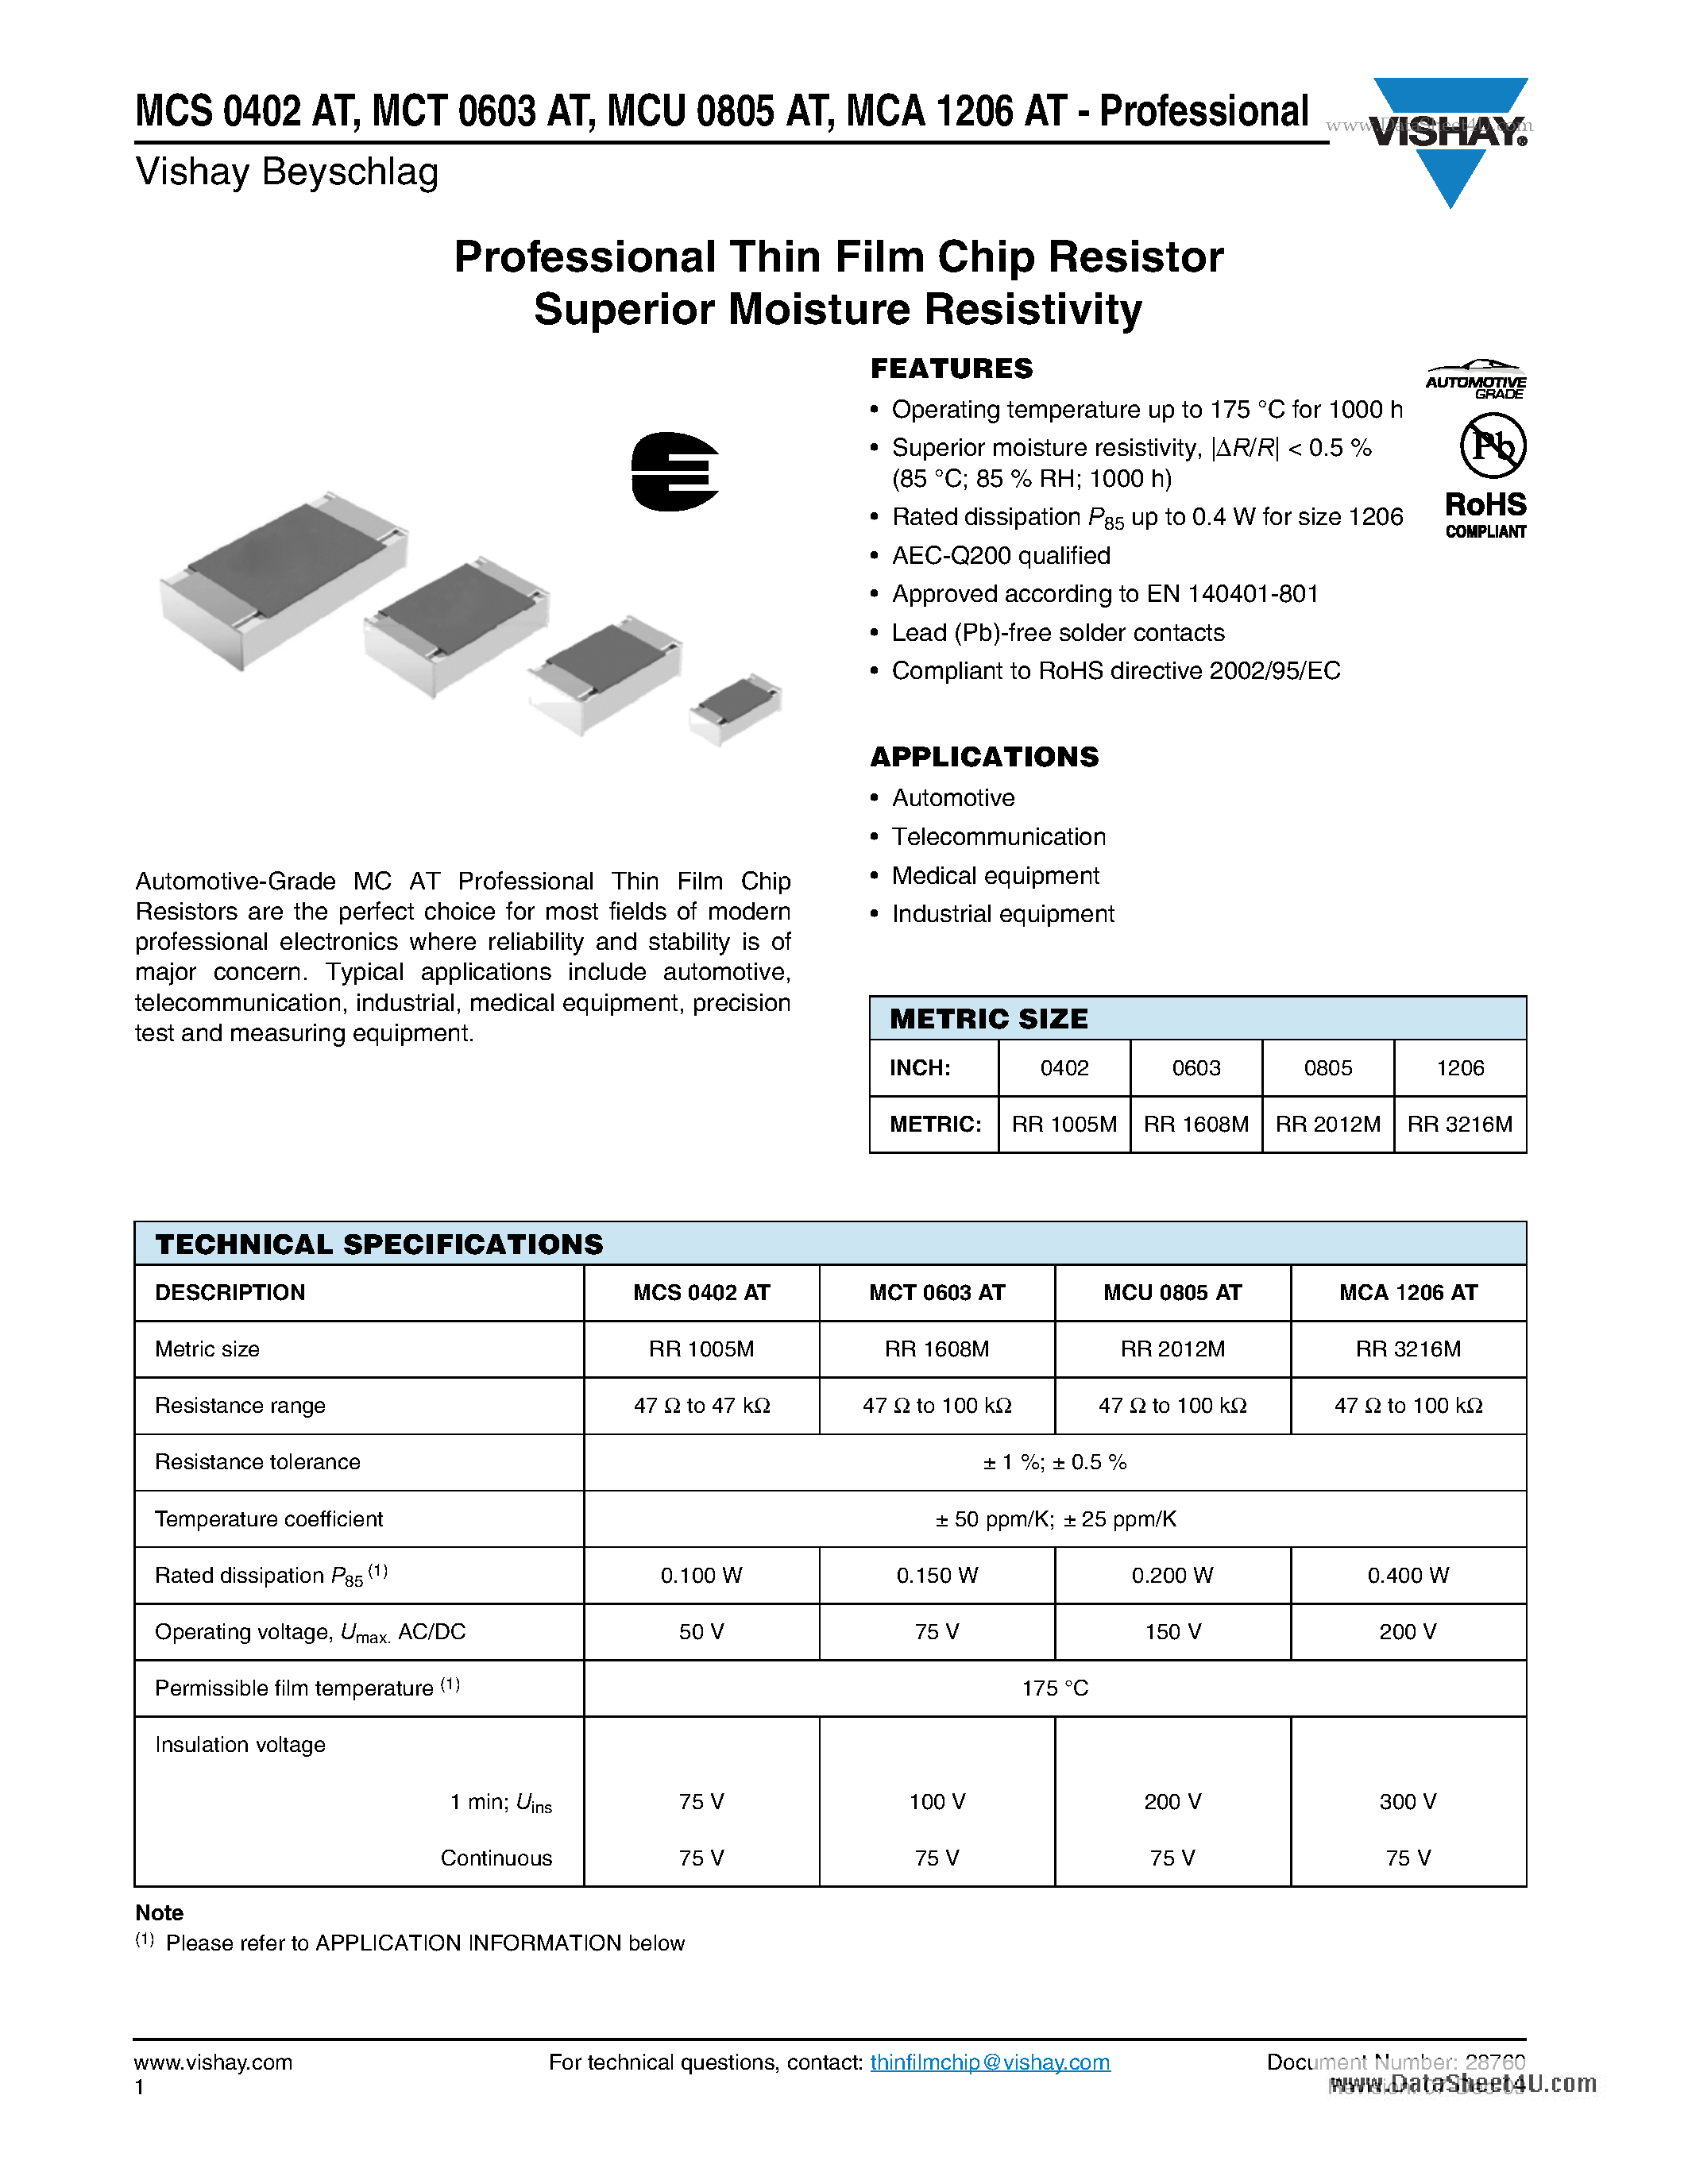 Даташит MCT0603AT - Professional Thin Film Chip Resistor Superior Moisture Resistivity страница 1